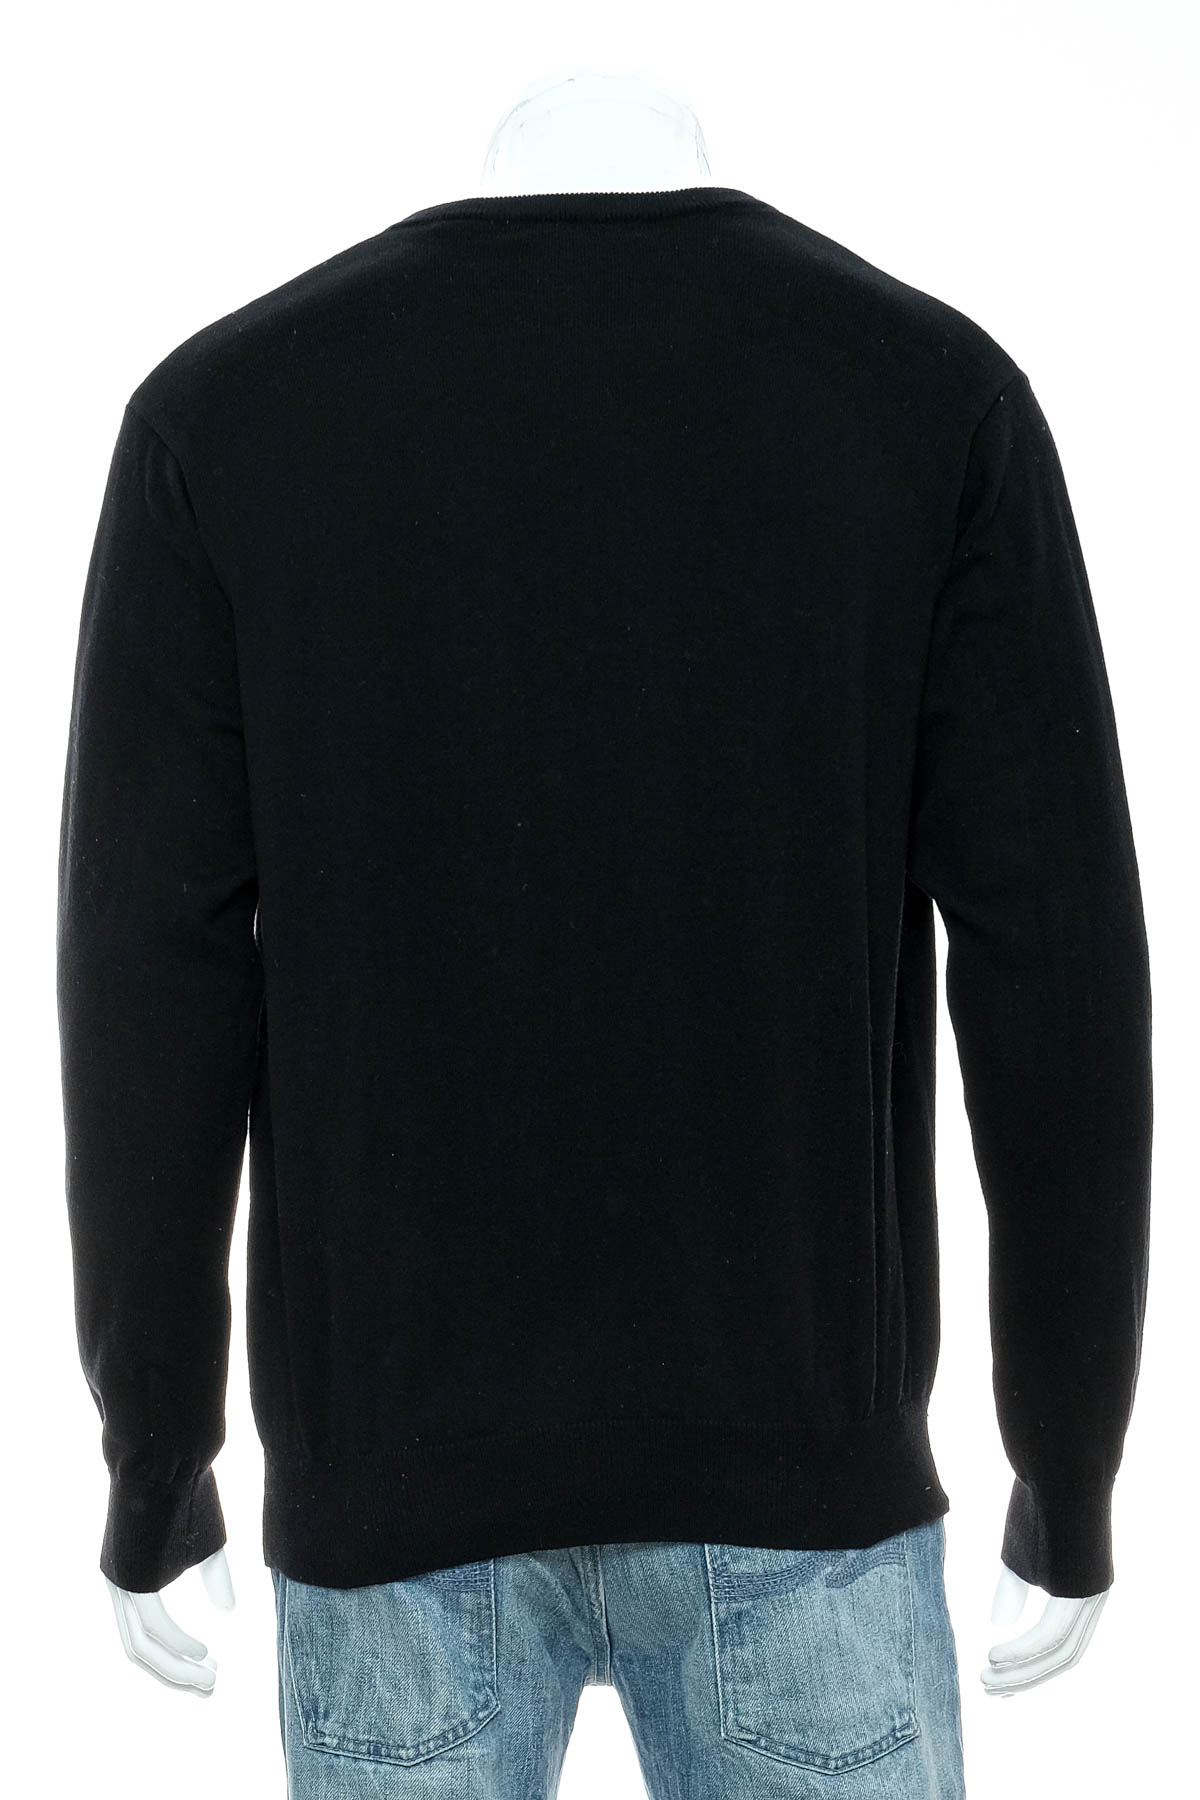 Men's sweater - GREG NORMAN - 1